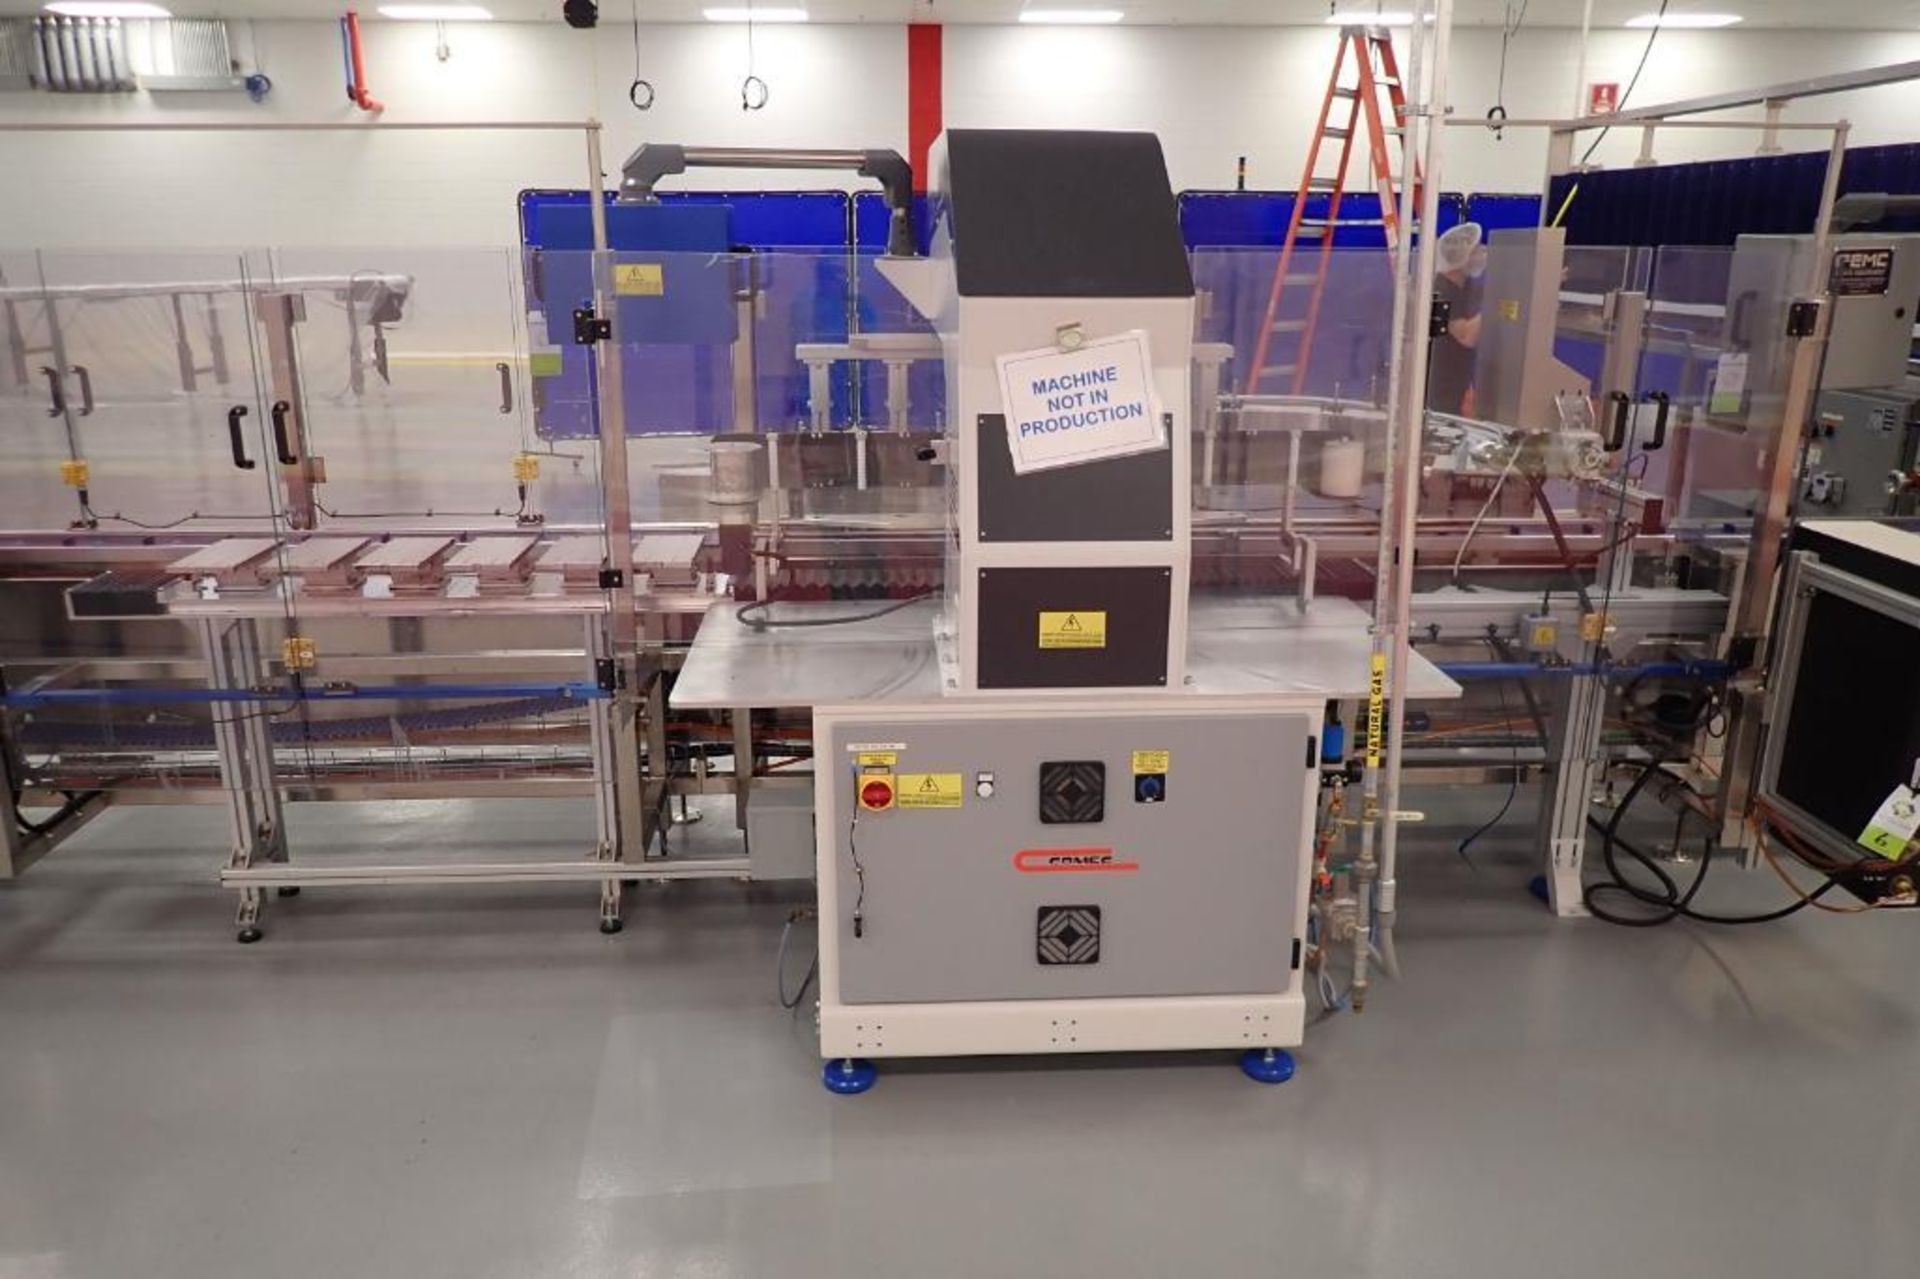 2015 Comec pad printing machine, Model KE166CE130, SN 10617, 6 spot, Allen Bradley panelview plus - Image 12 of 32